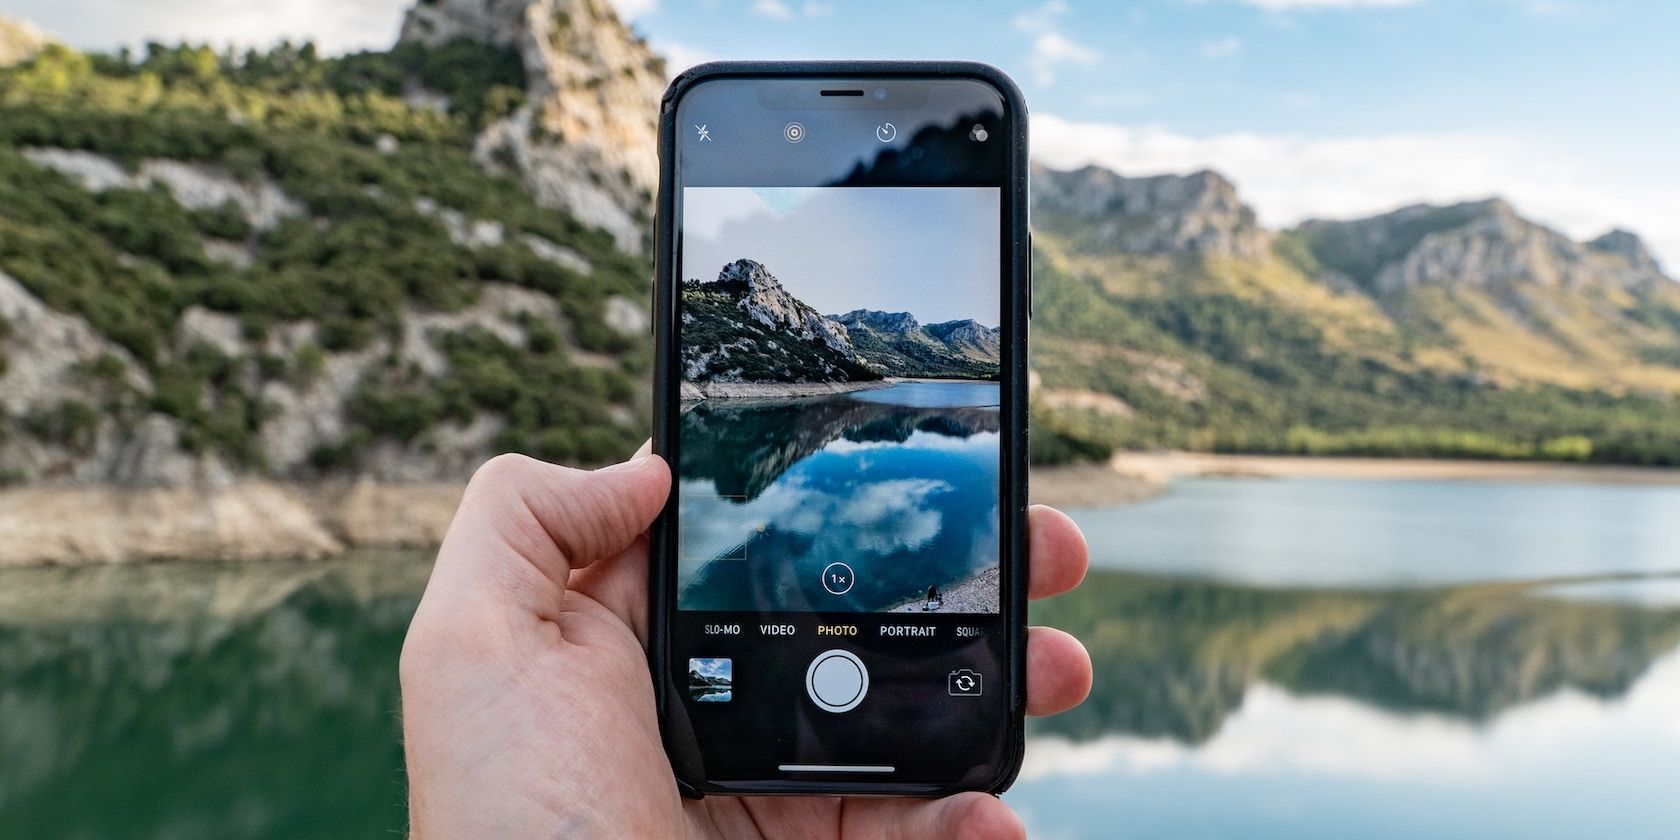 Camera app on an iPhone